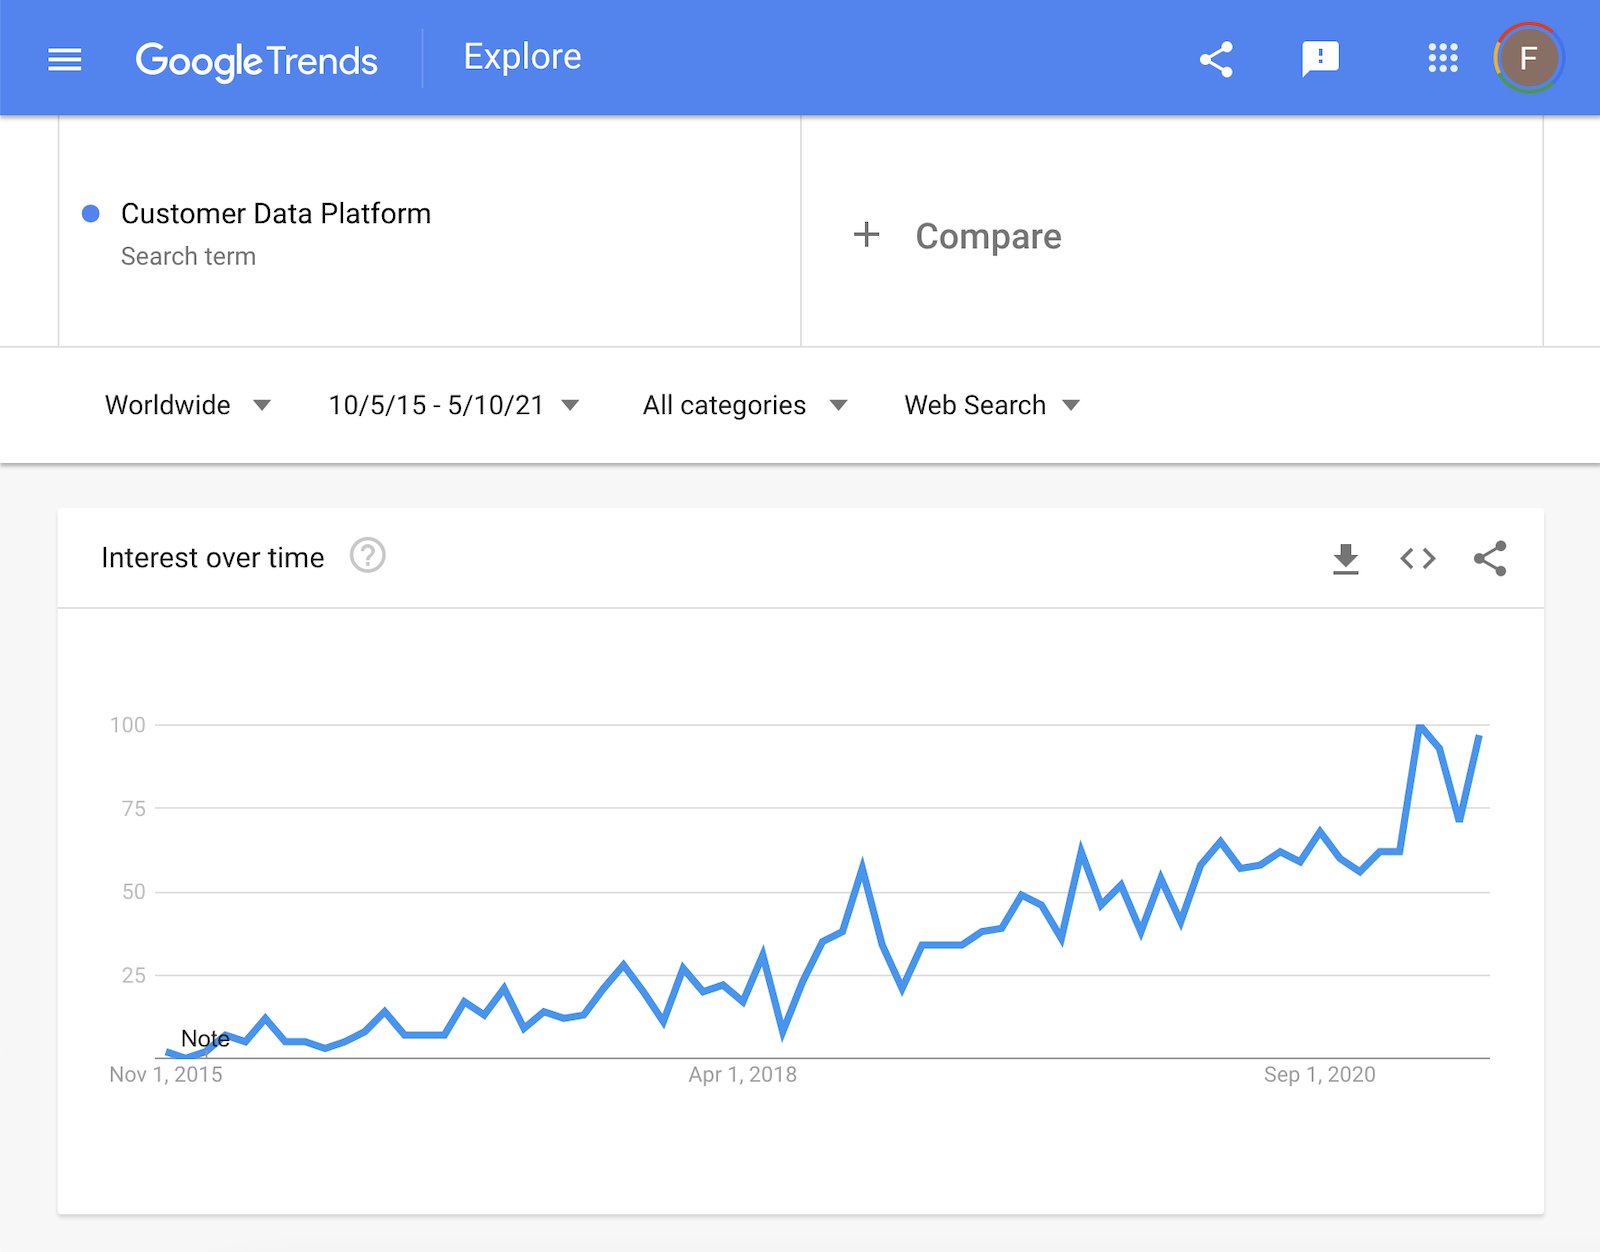 Customer Data Platform on Google Trends